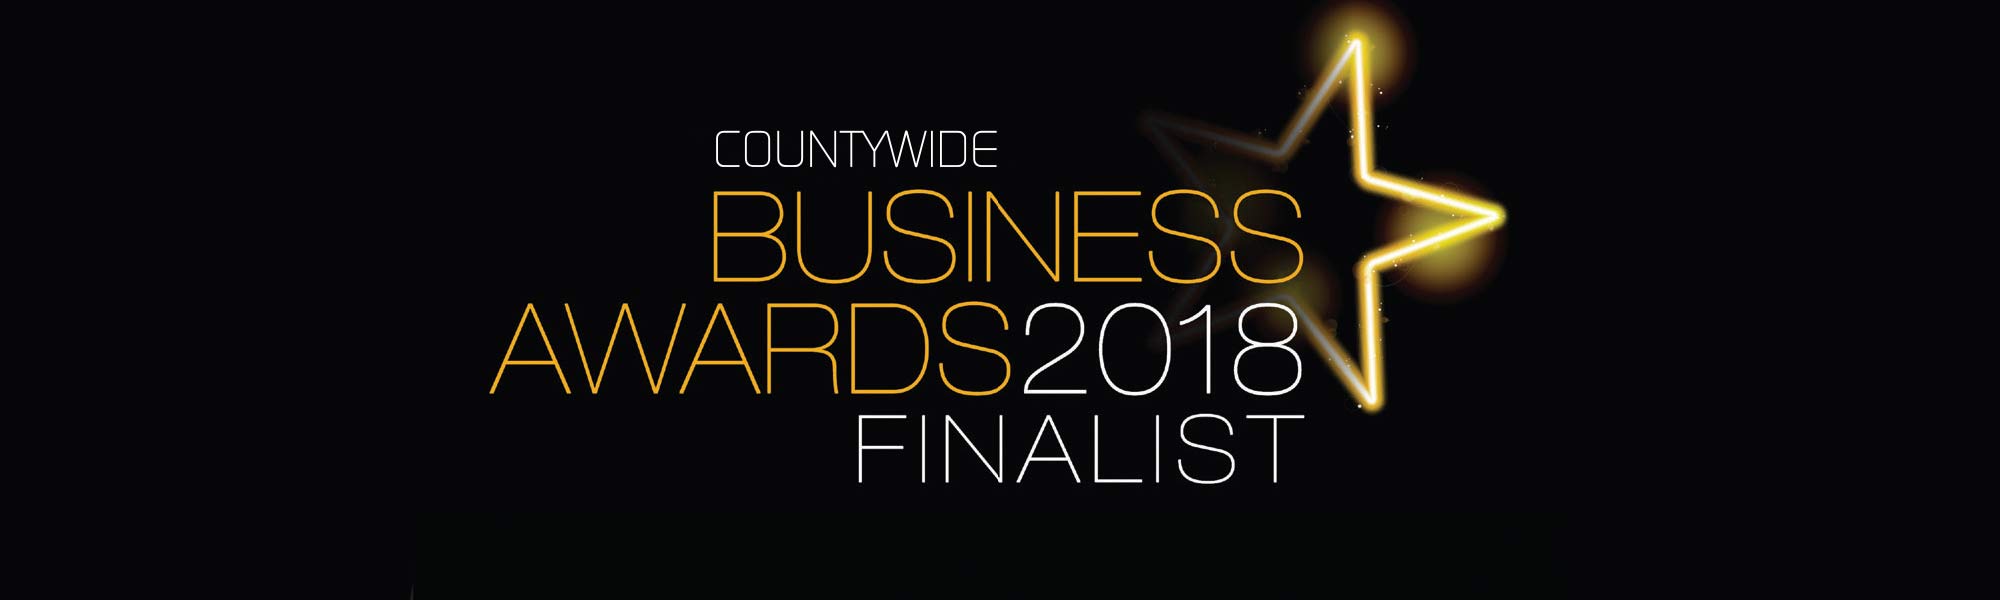 the hawthorns braintree countrywide essex business awards 2018 finalist logo banner